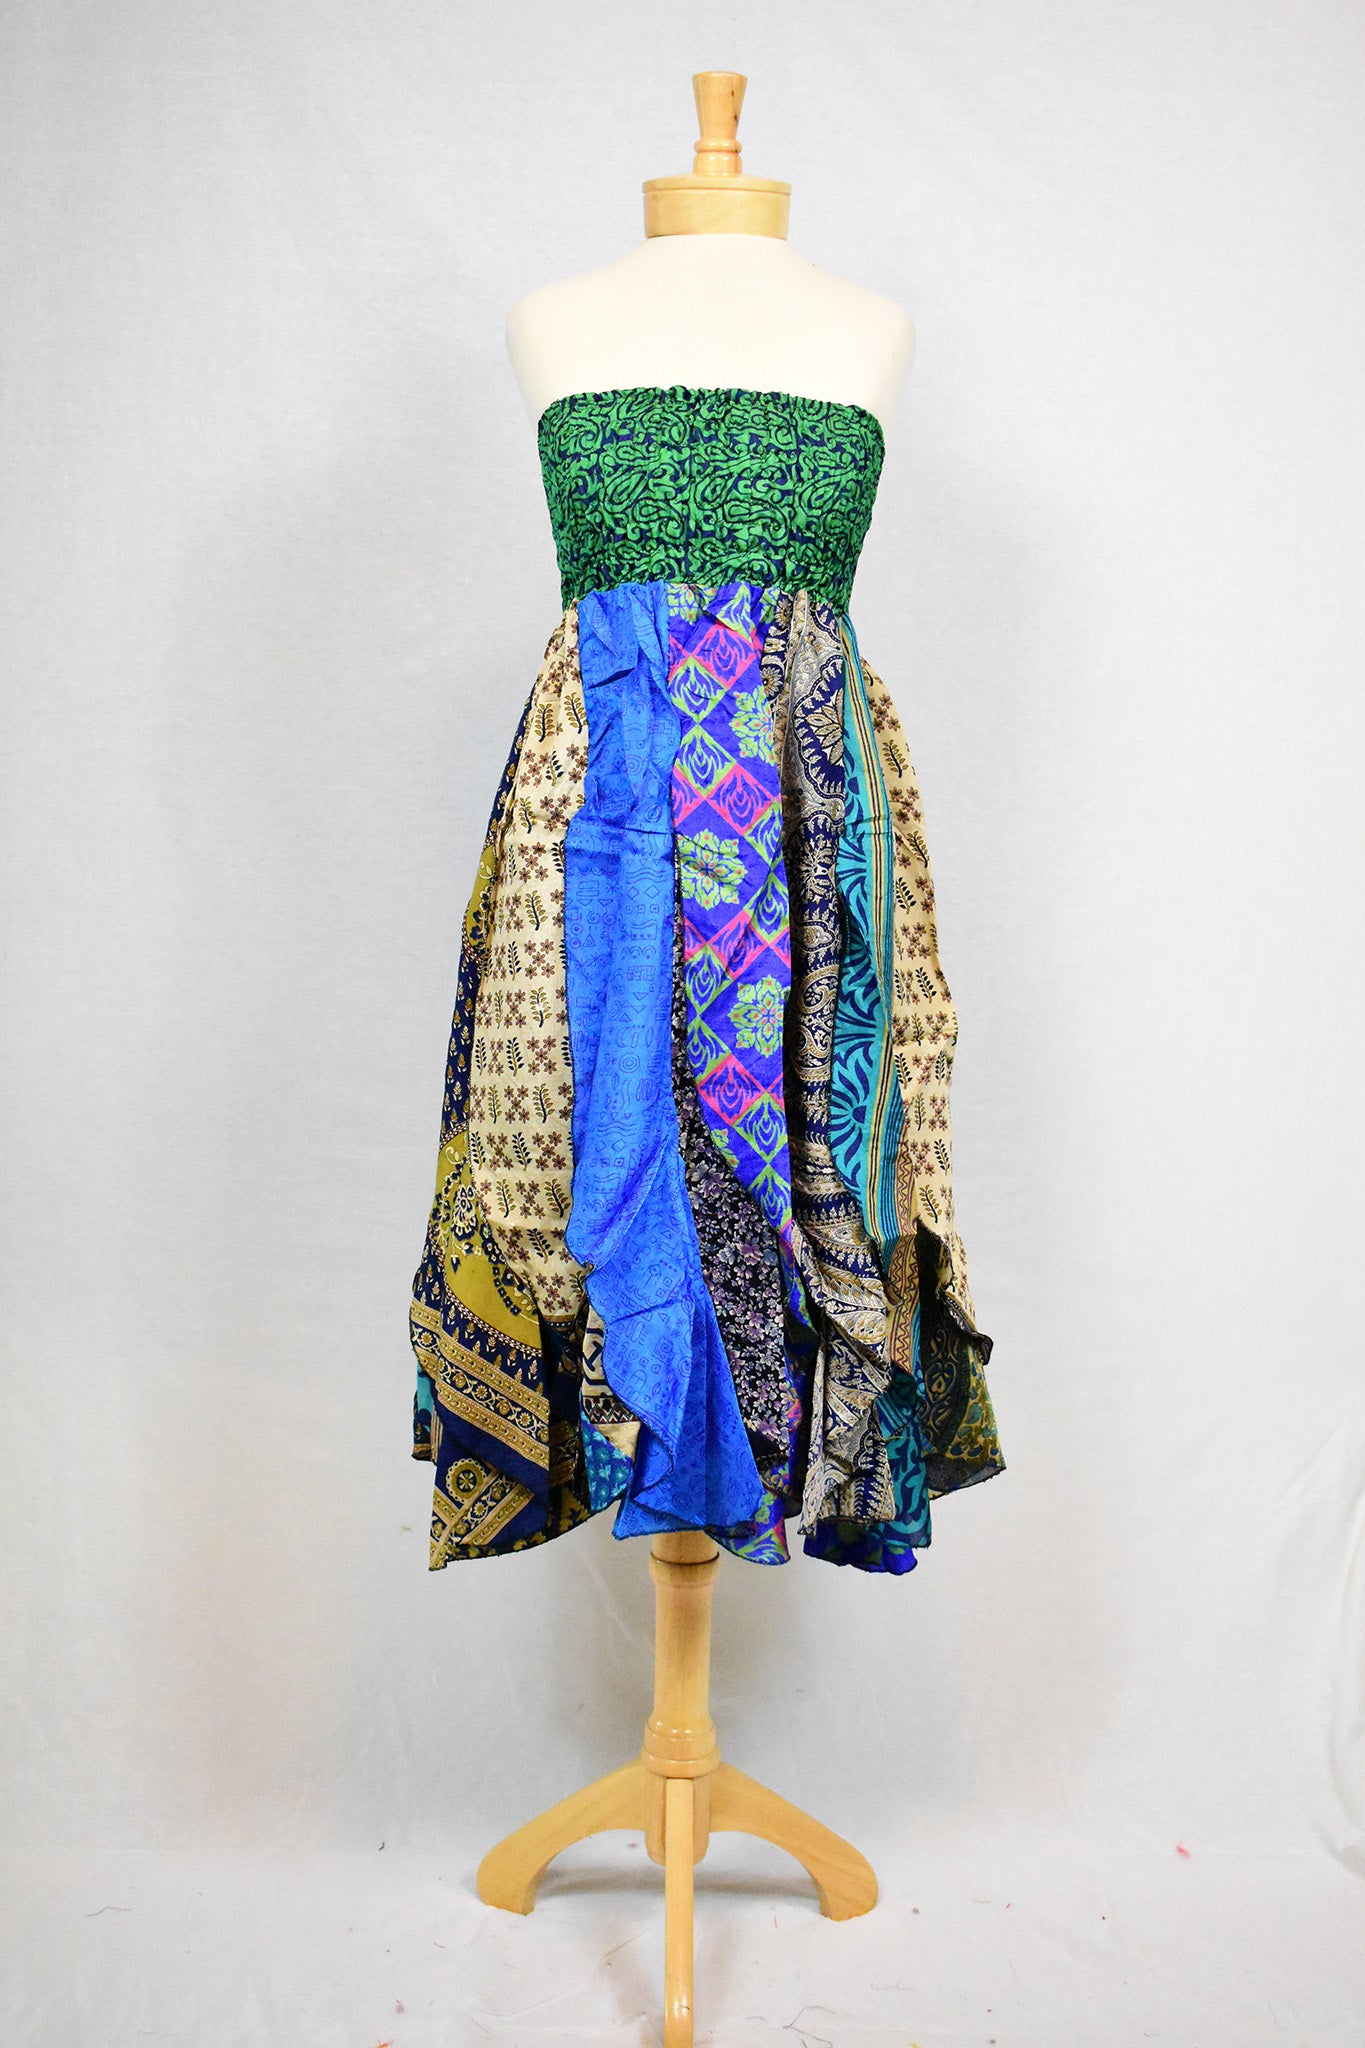 Fairy Dress Ruffle Skirt 6 Front View